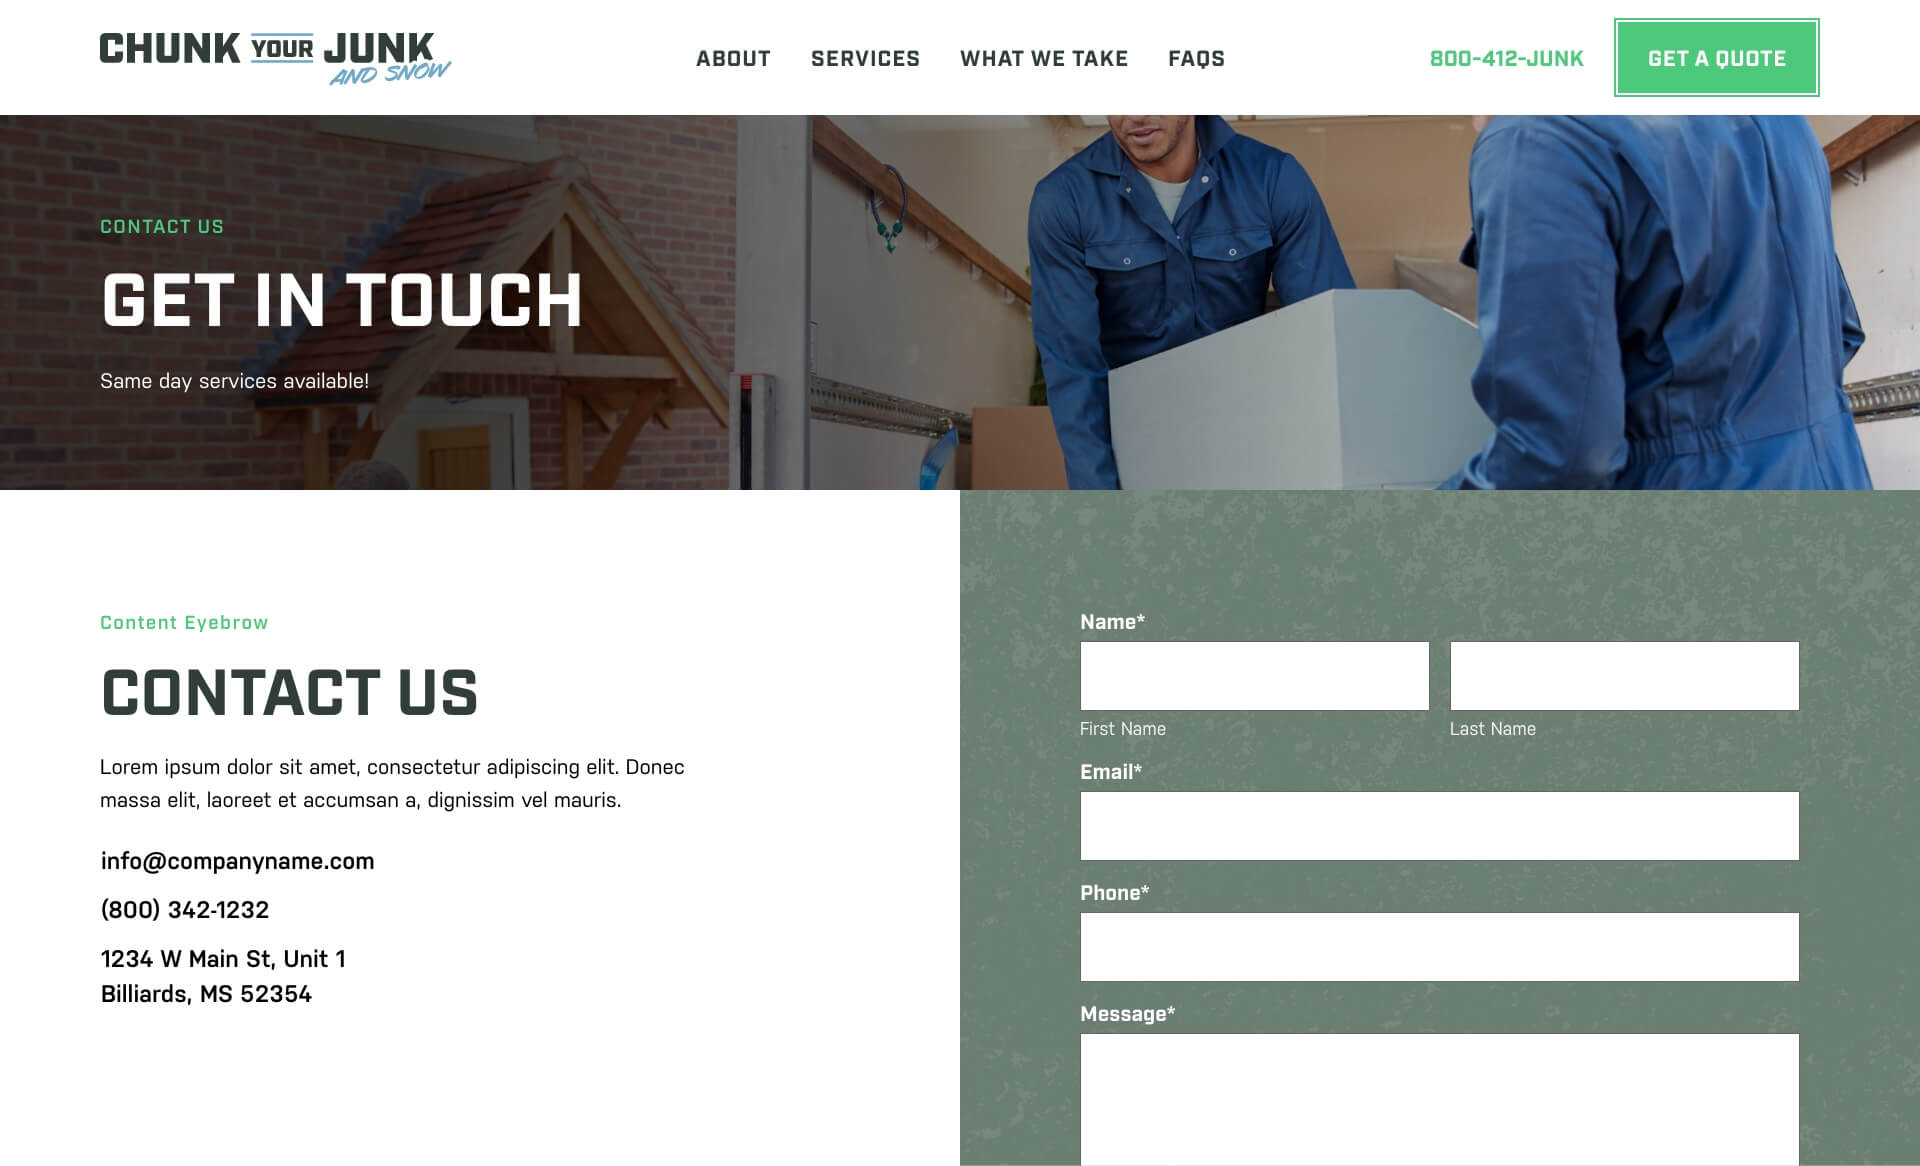 Chunk Your Junk Marketing Website - 5